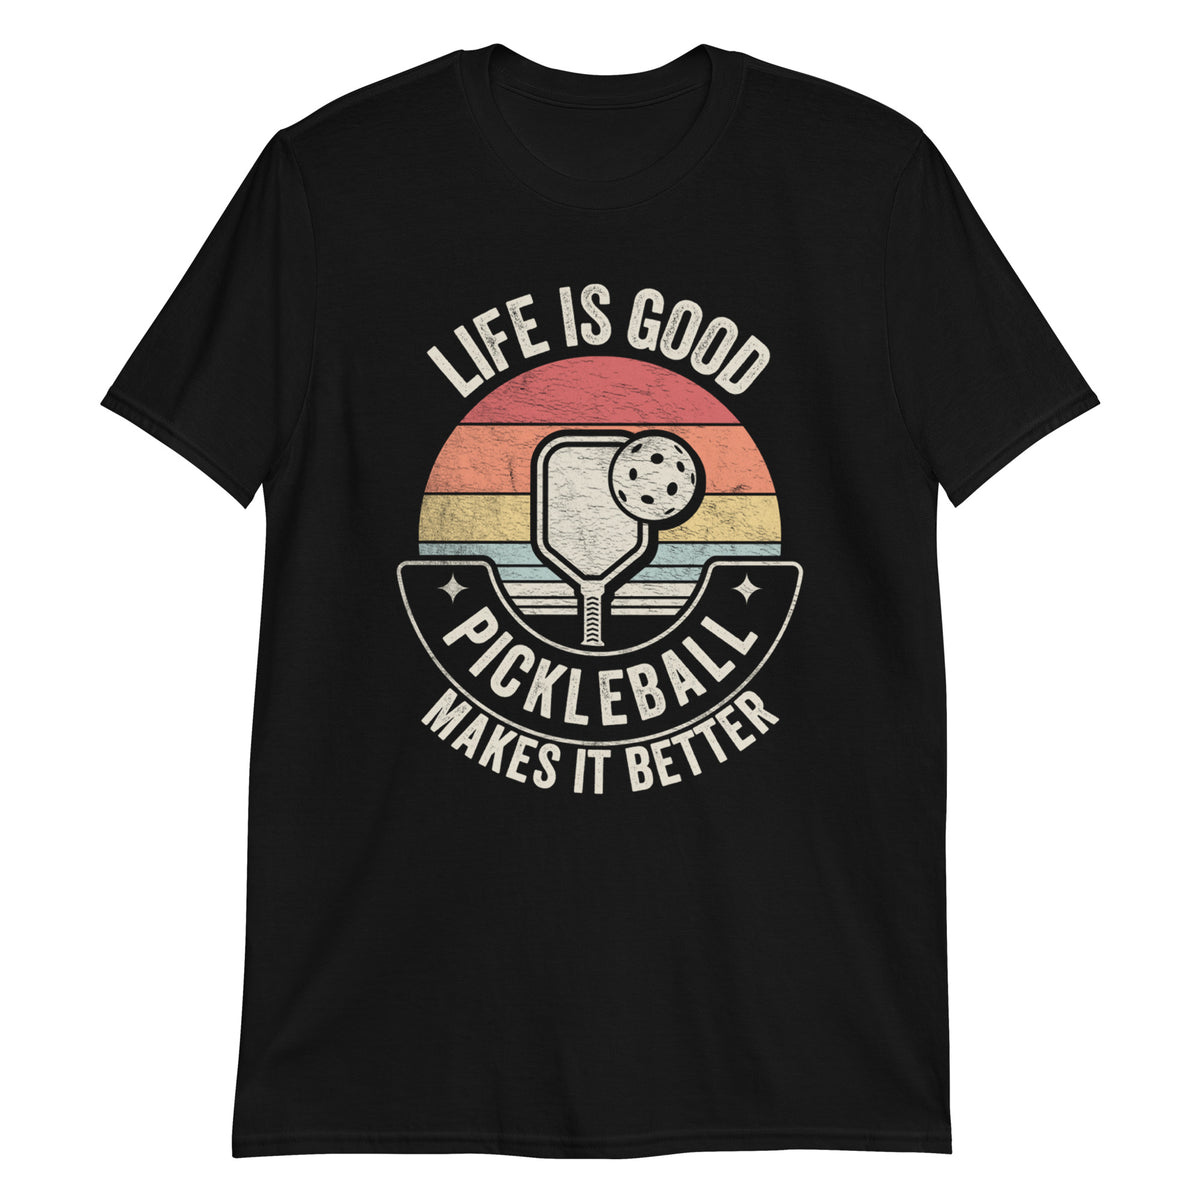 Life is Good Pickleball Makes it Better T-Shirt